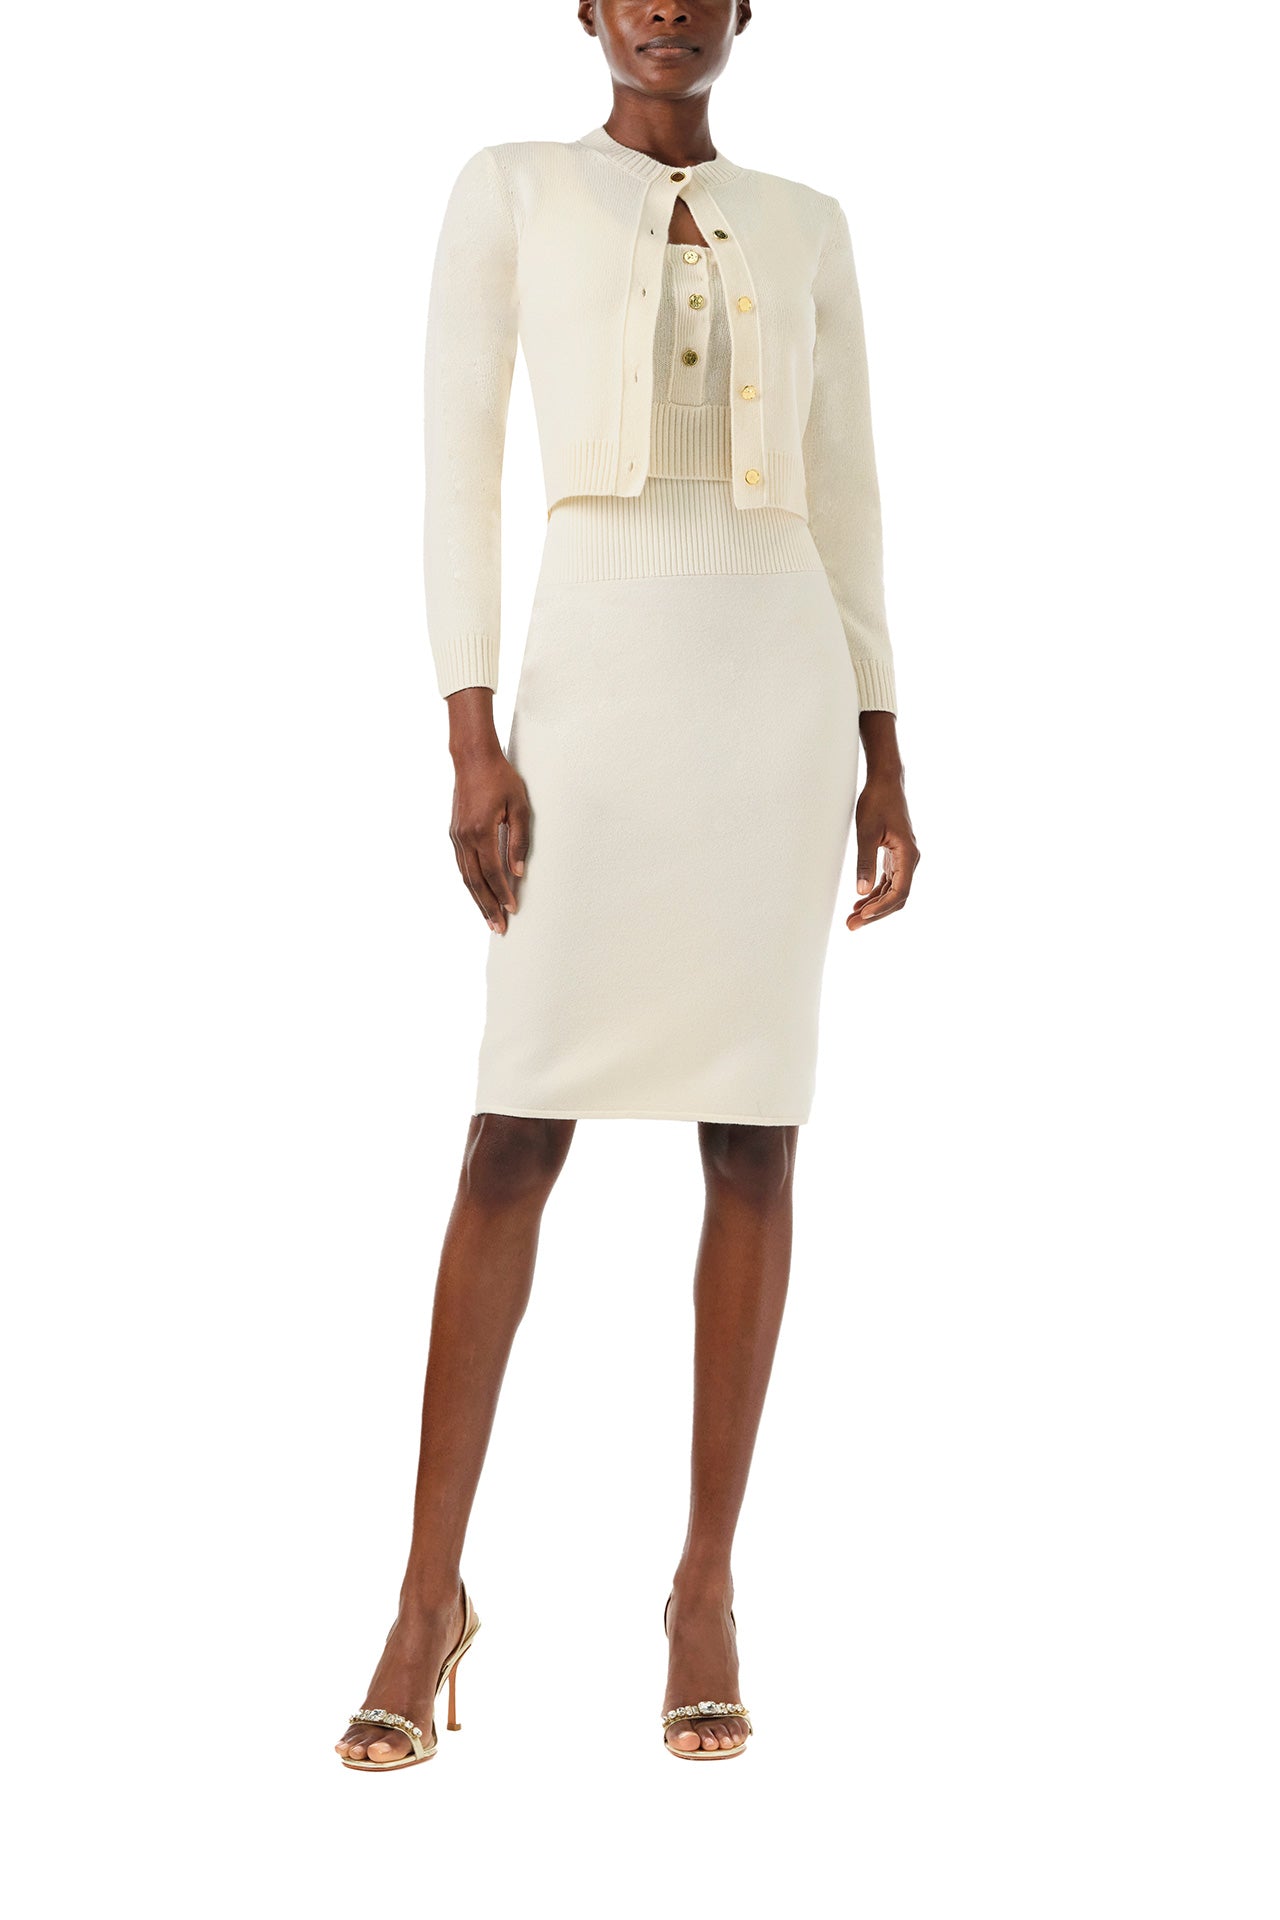 Monique Lhuillier white cashmere pencil skirt - front with cardigan.